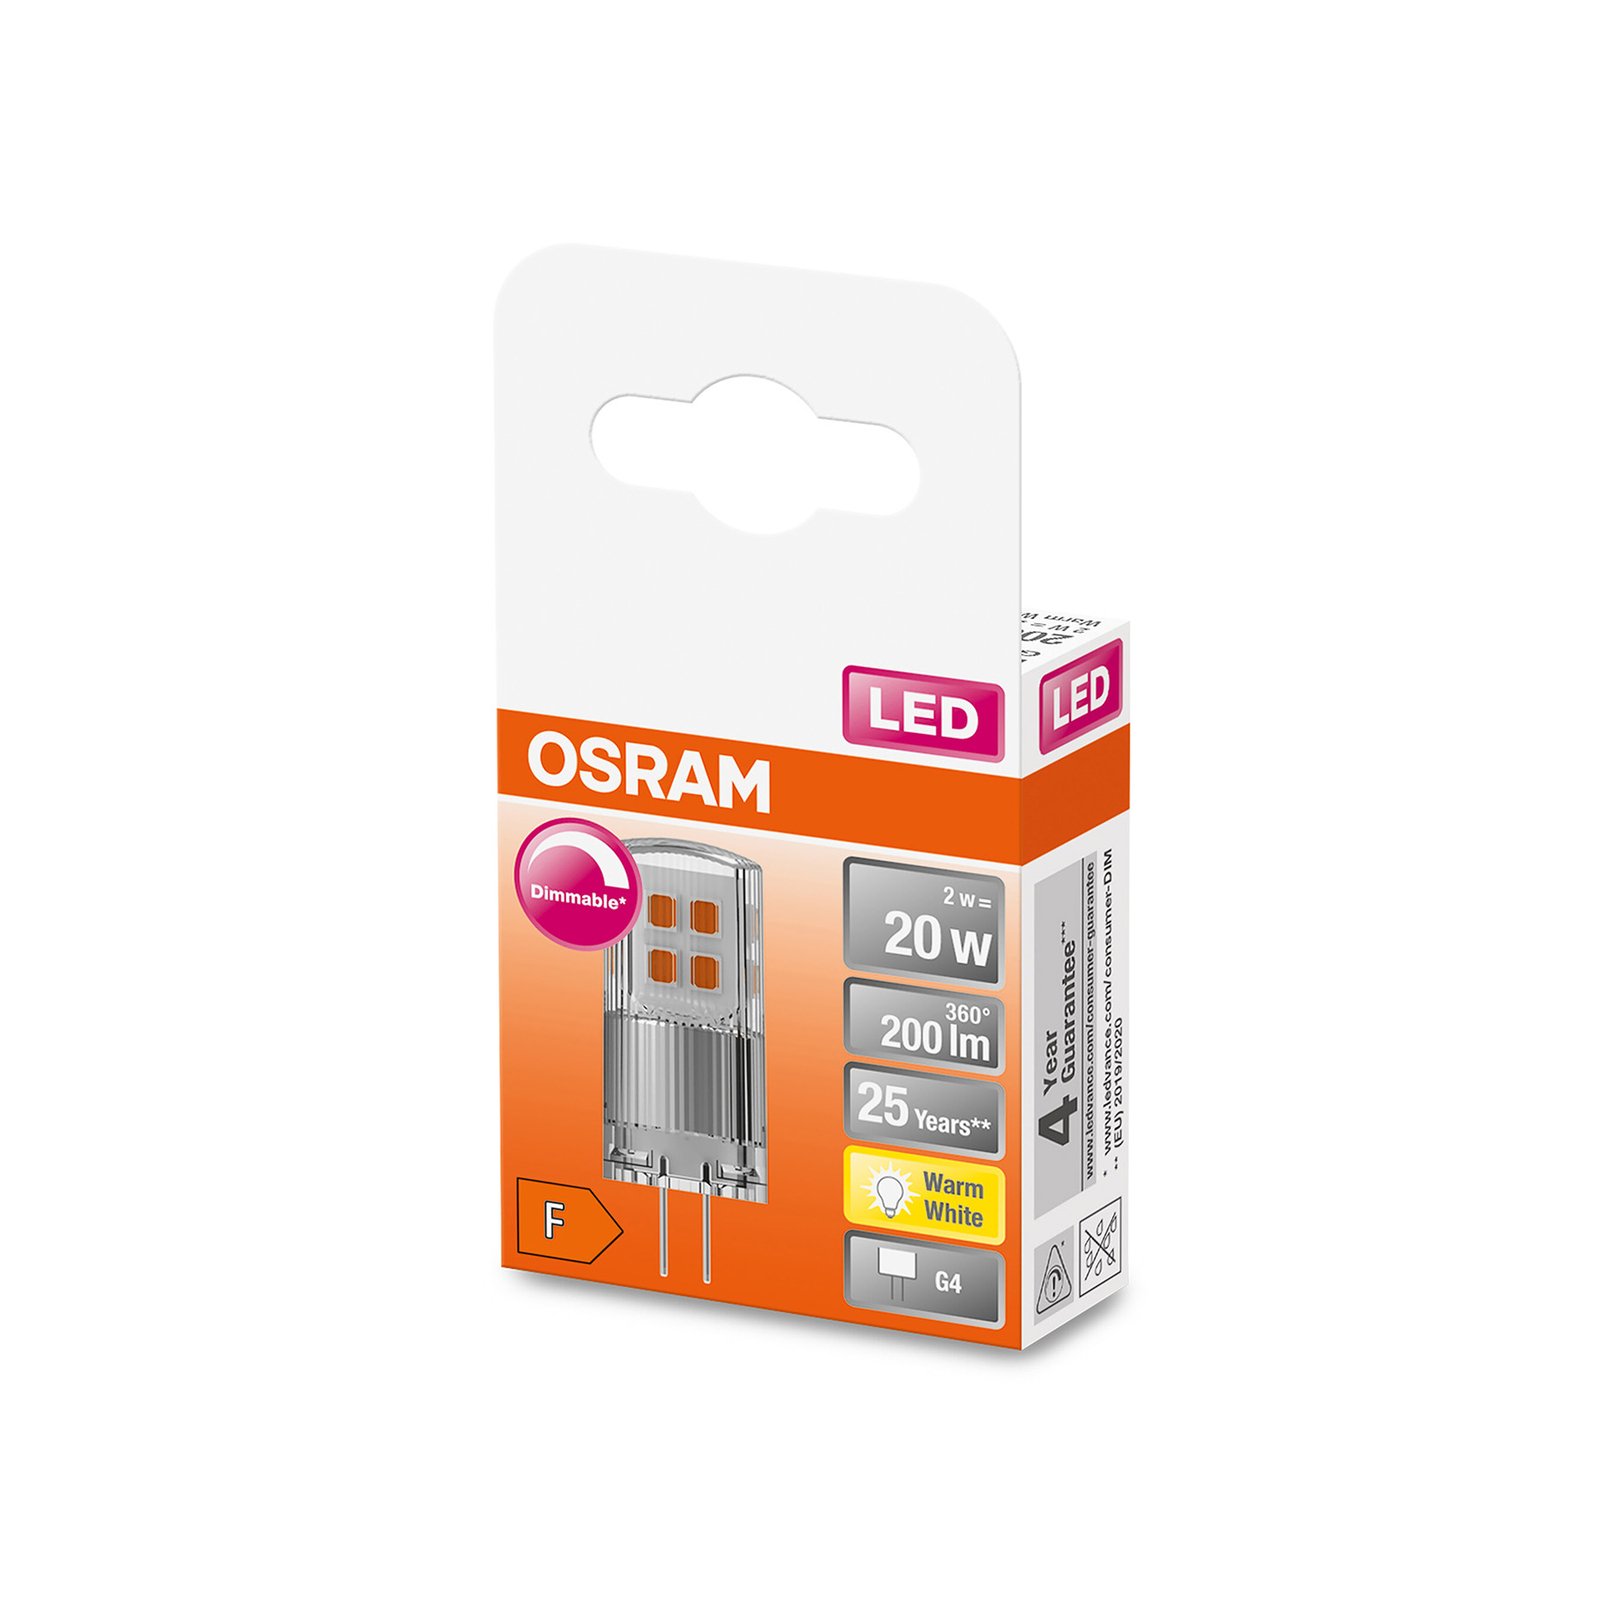 OSRAM PIN 12V LED stiftlamp G4 2W 200lm dimbaar